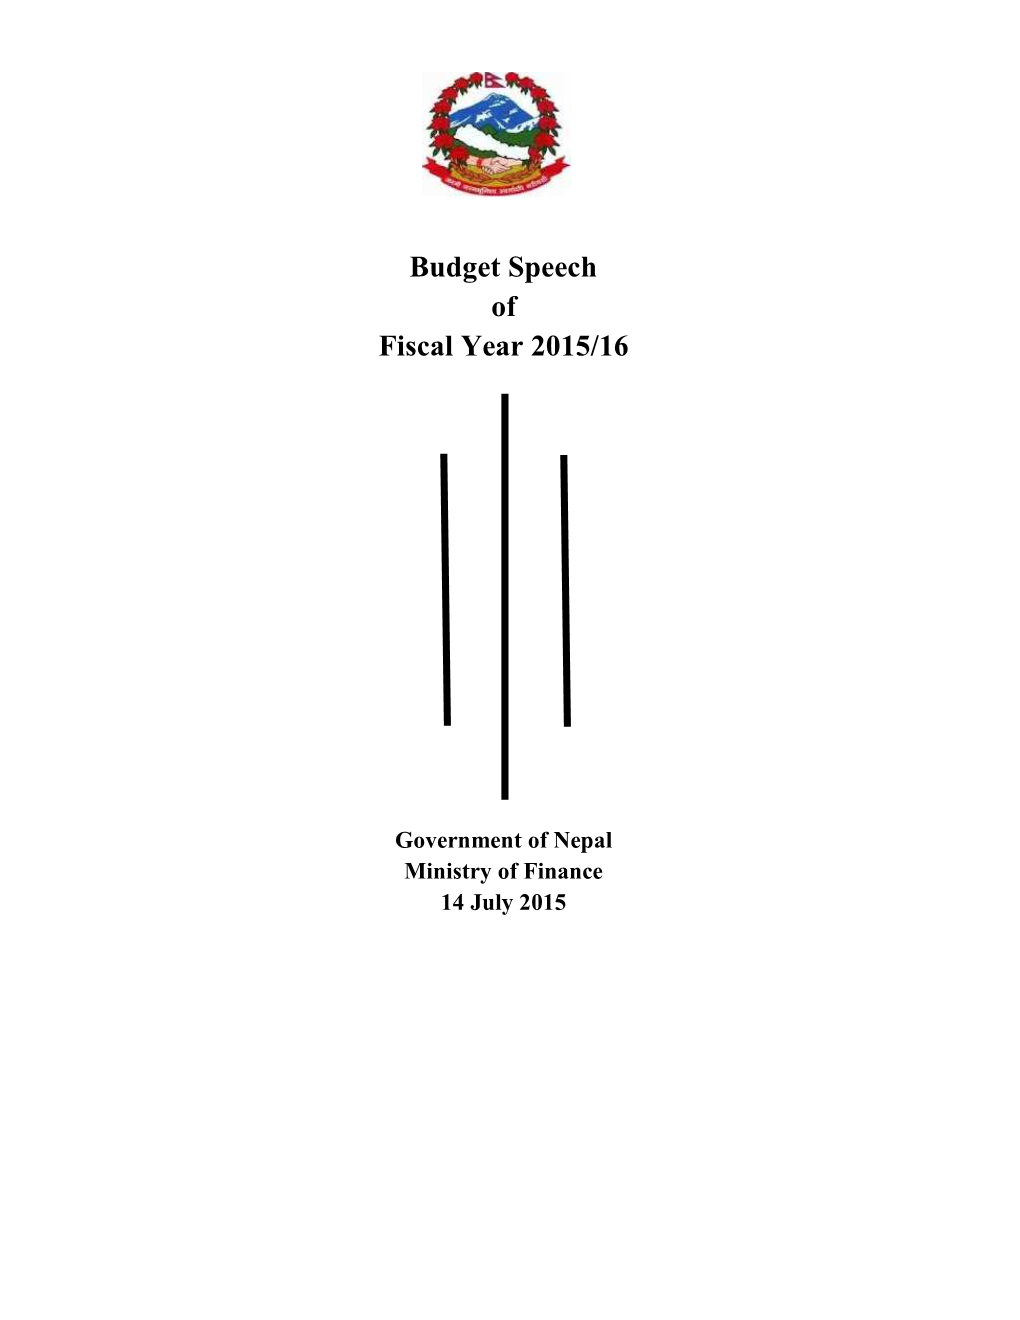 Budget Speech of Fiscal Year 2015/16